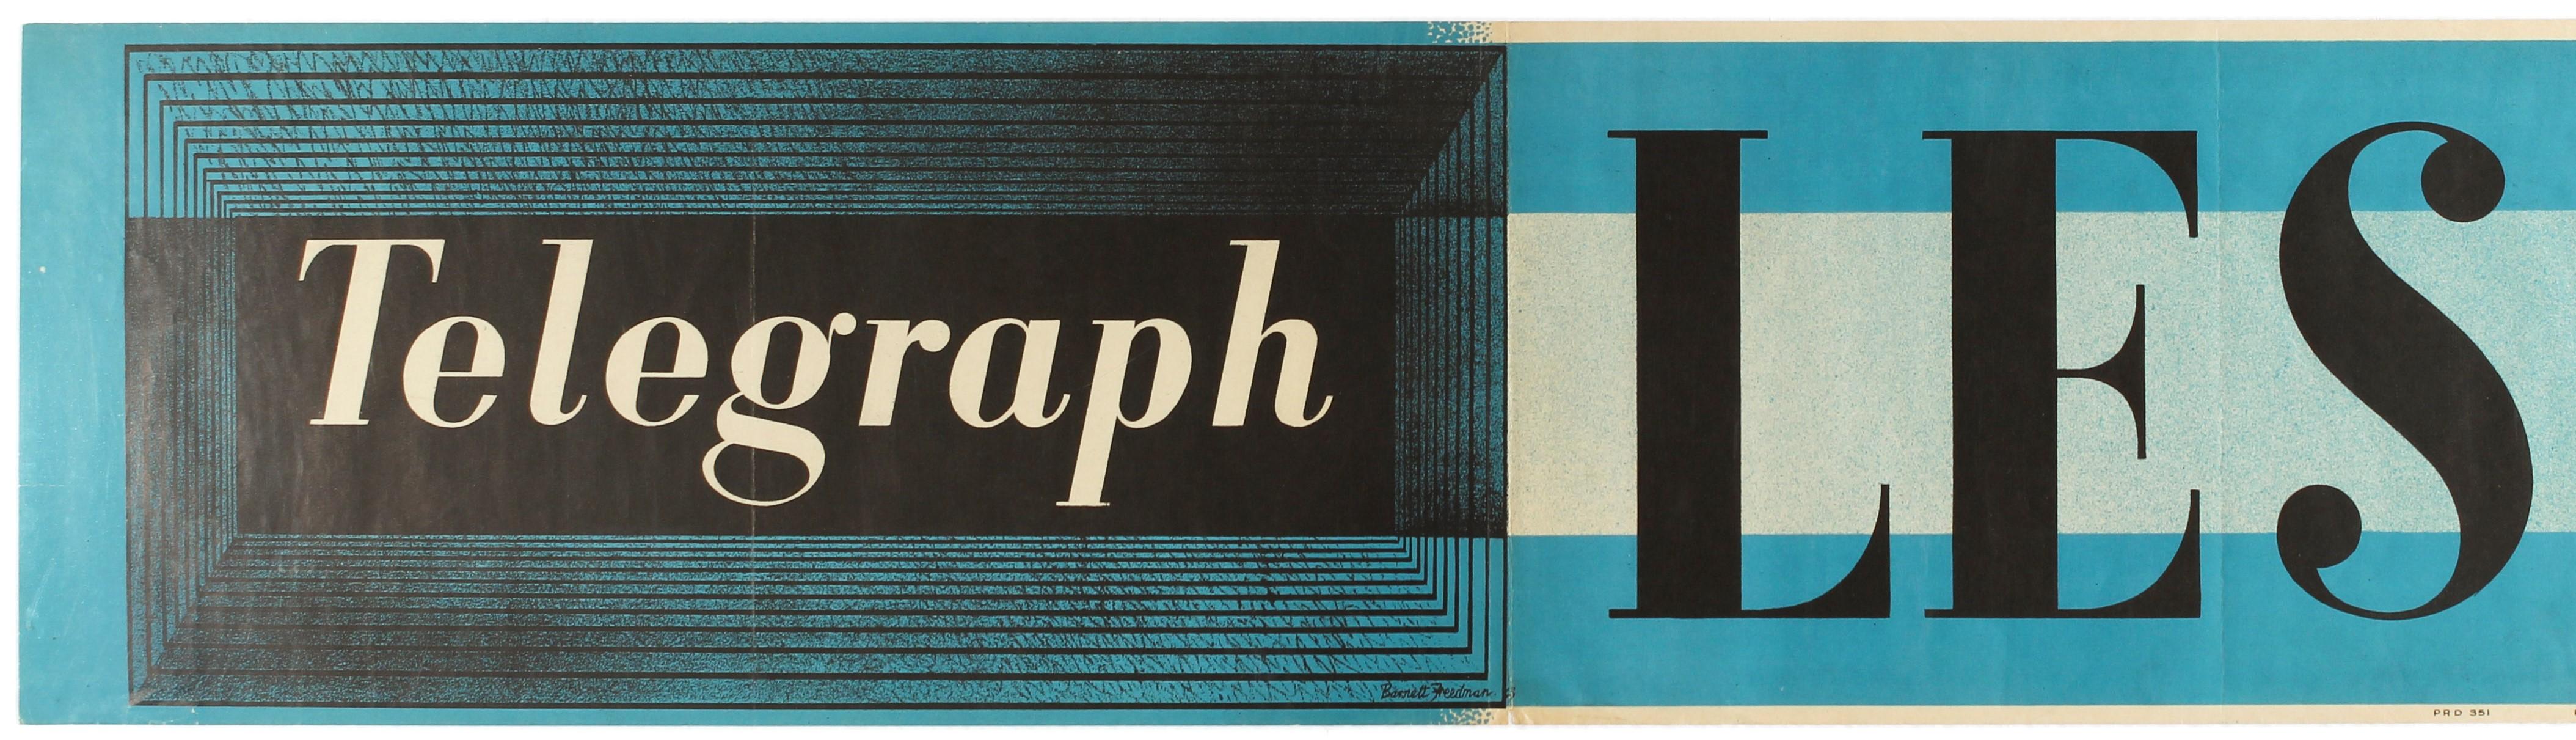 Original Vintage Poster Telegraph Less GPO Post Office WWII Modernist Typography - Print by Barnett Freedman